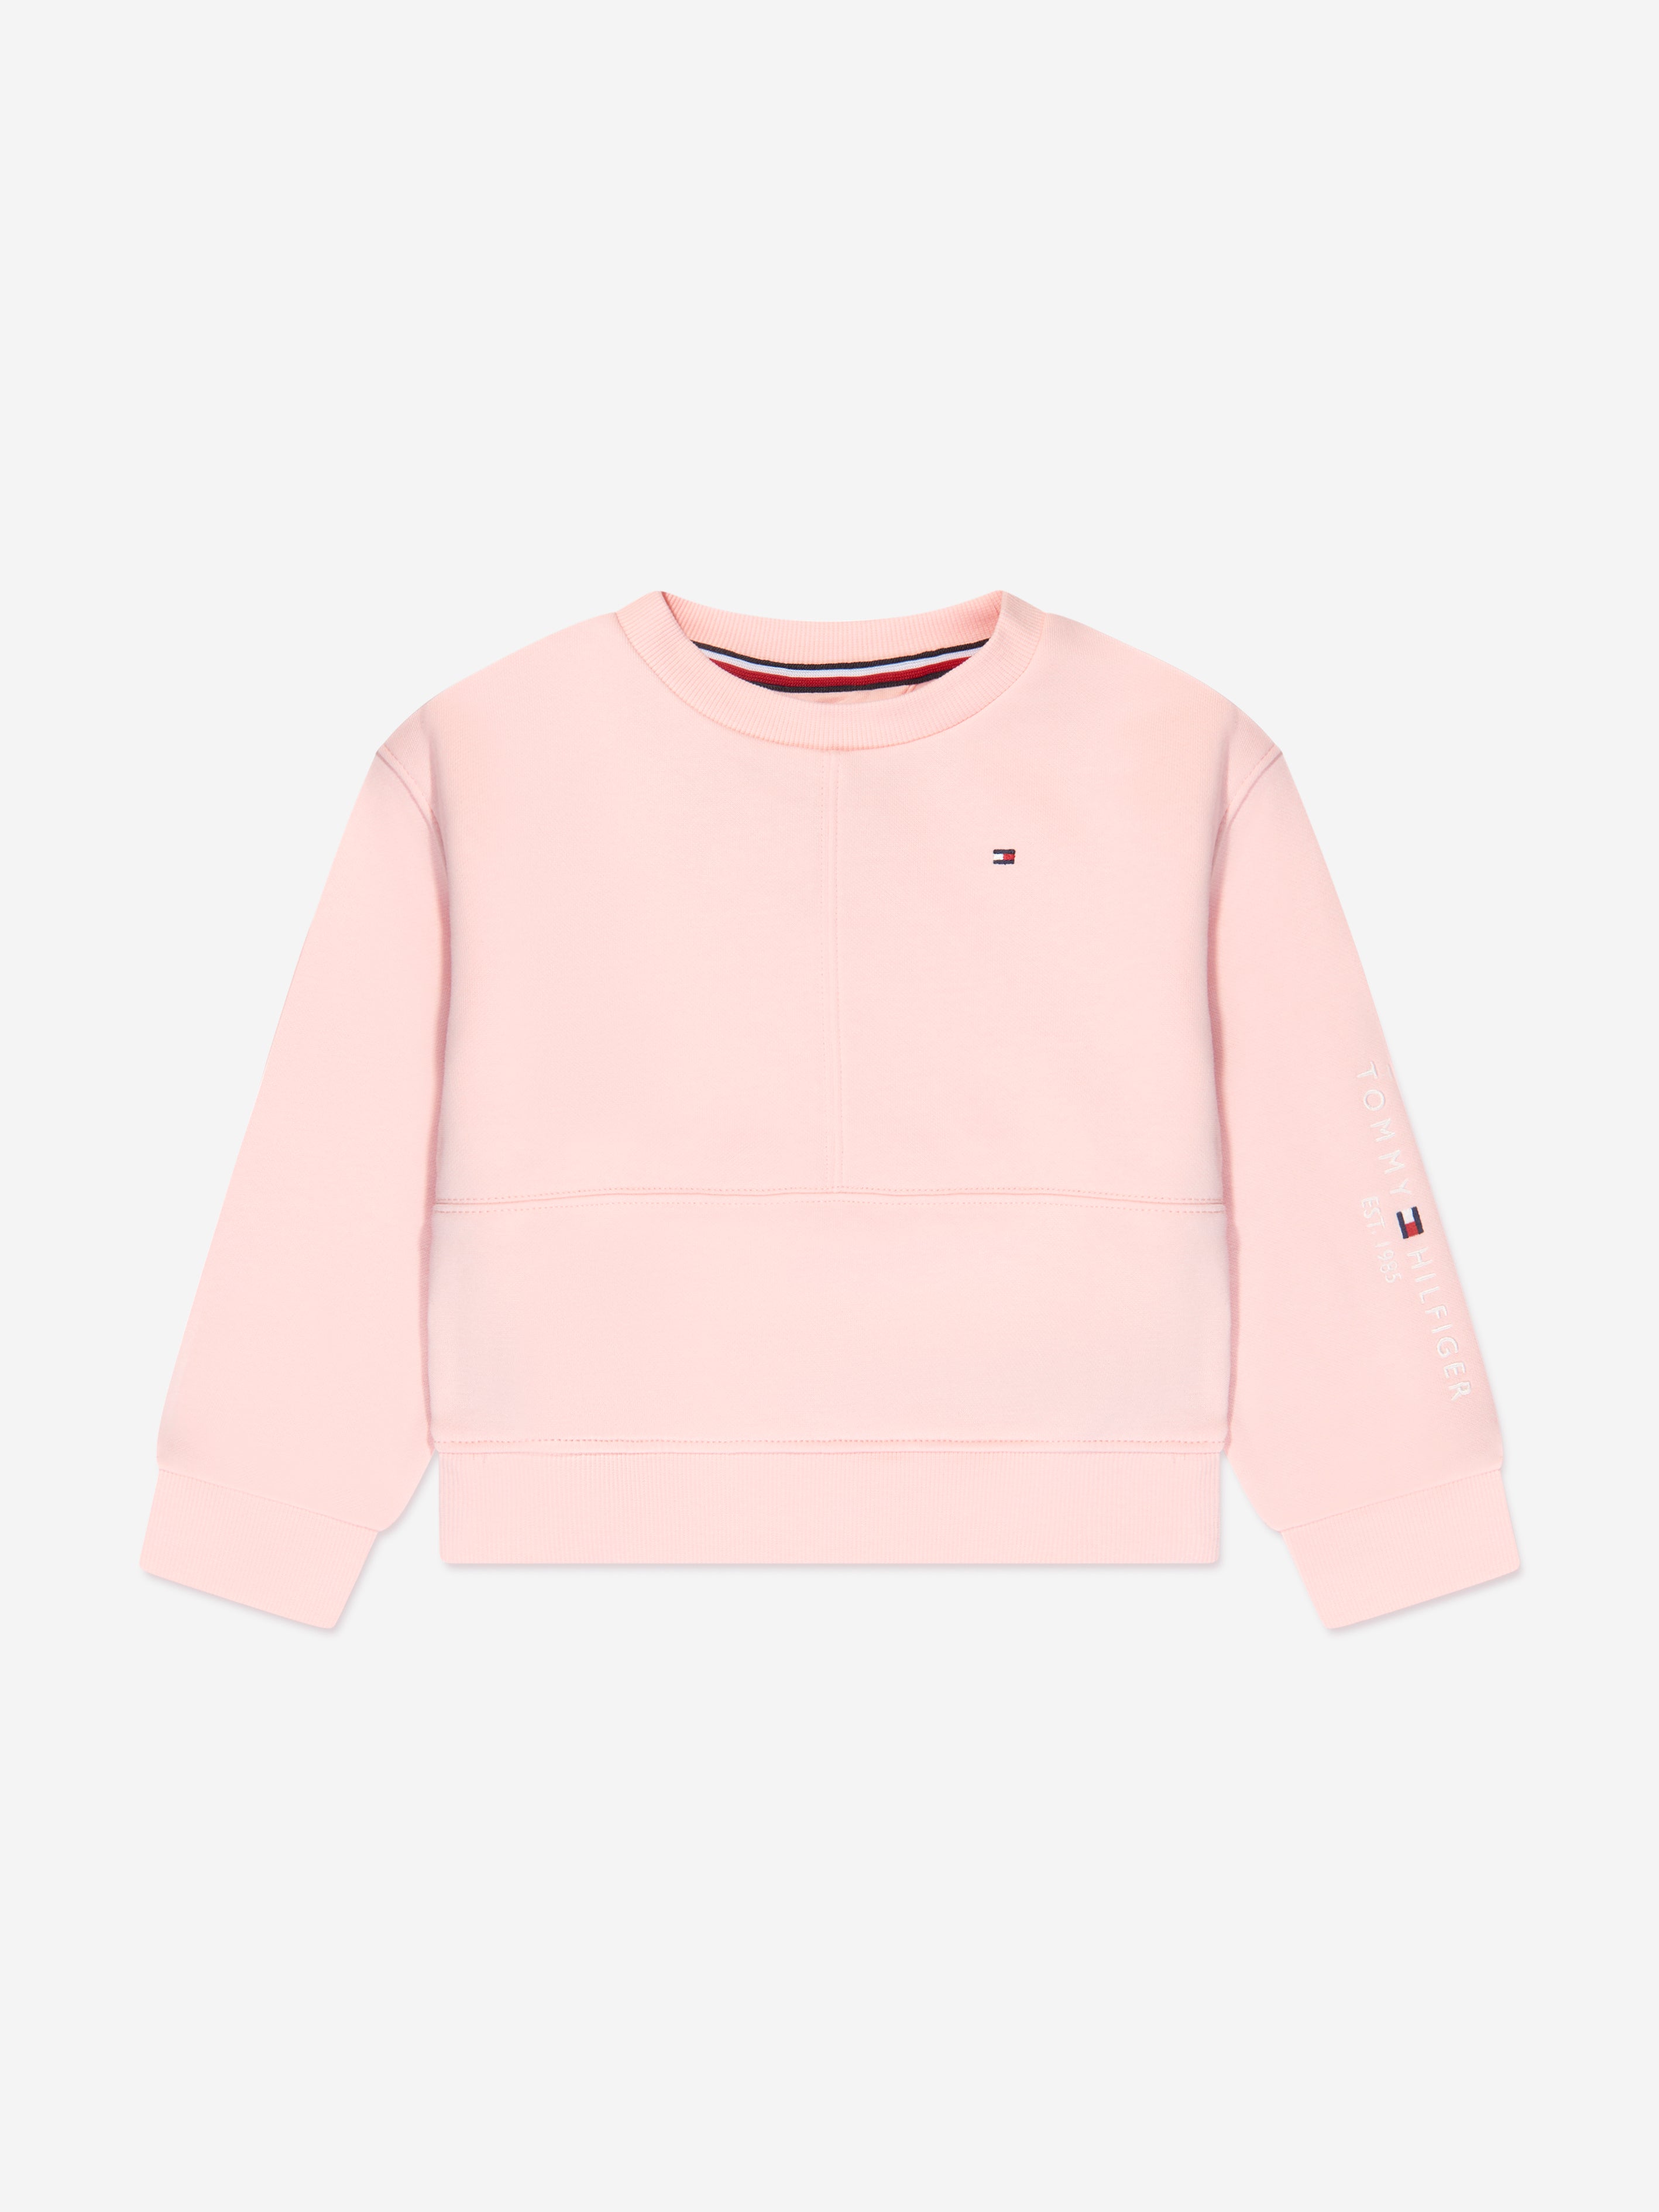 Girls Essential Sweatshirt in Pink Childsplay | Clothing